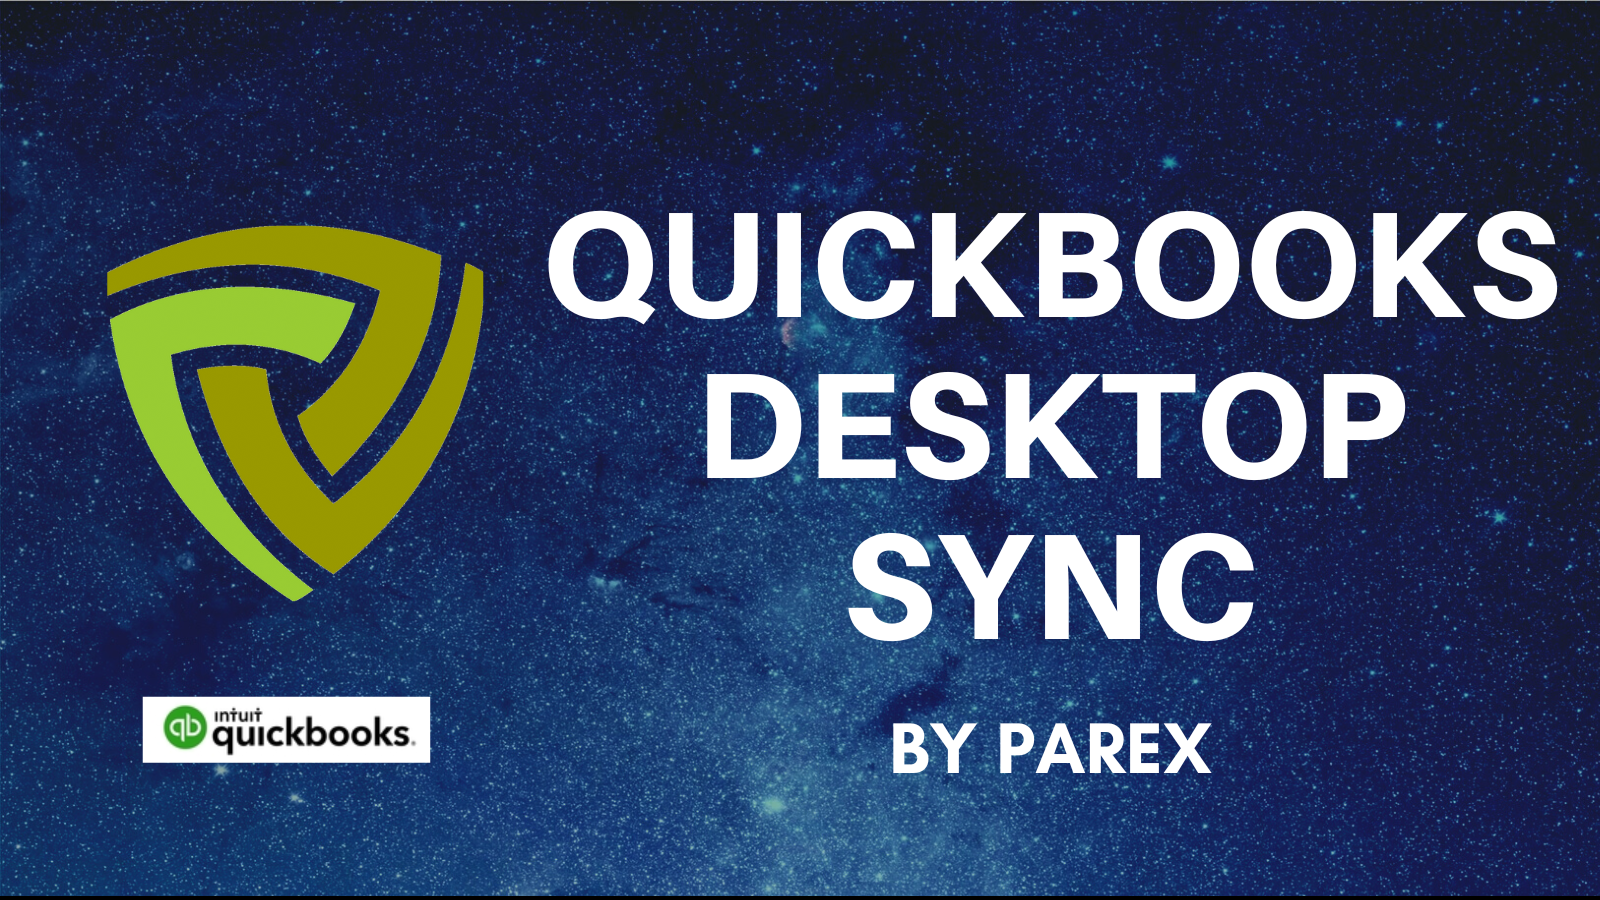 QuickBooks Desktop by Parex